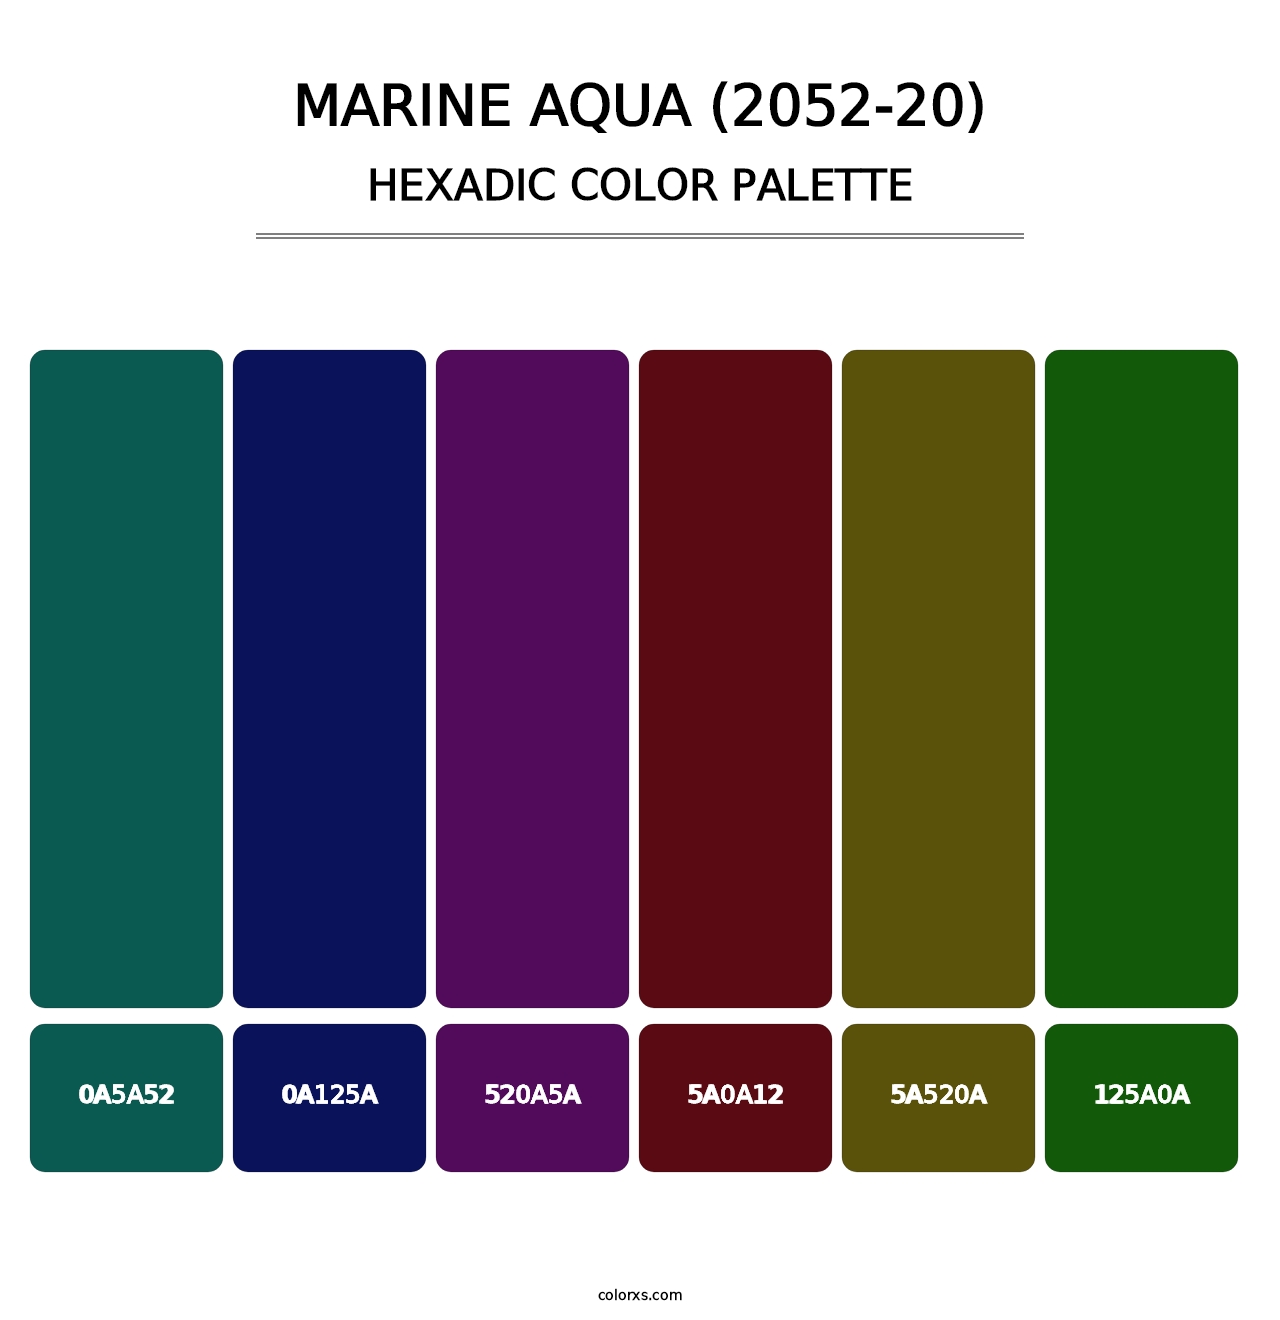 Marine Aqua (2052-20) - Hexadic Color Palette